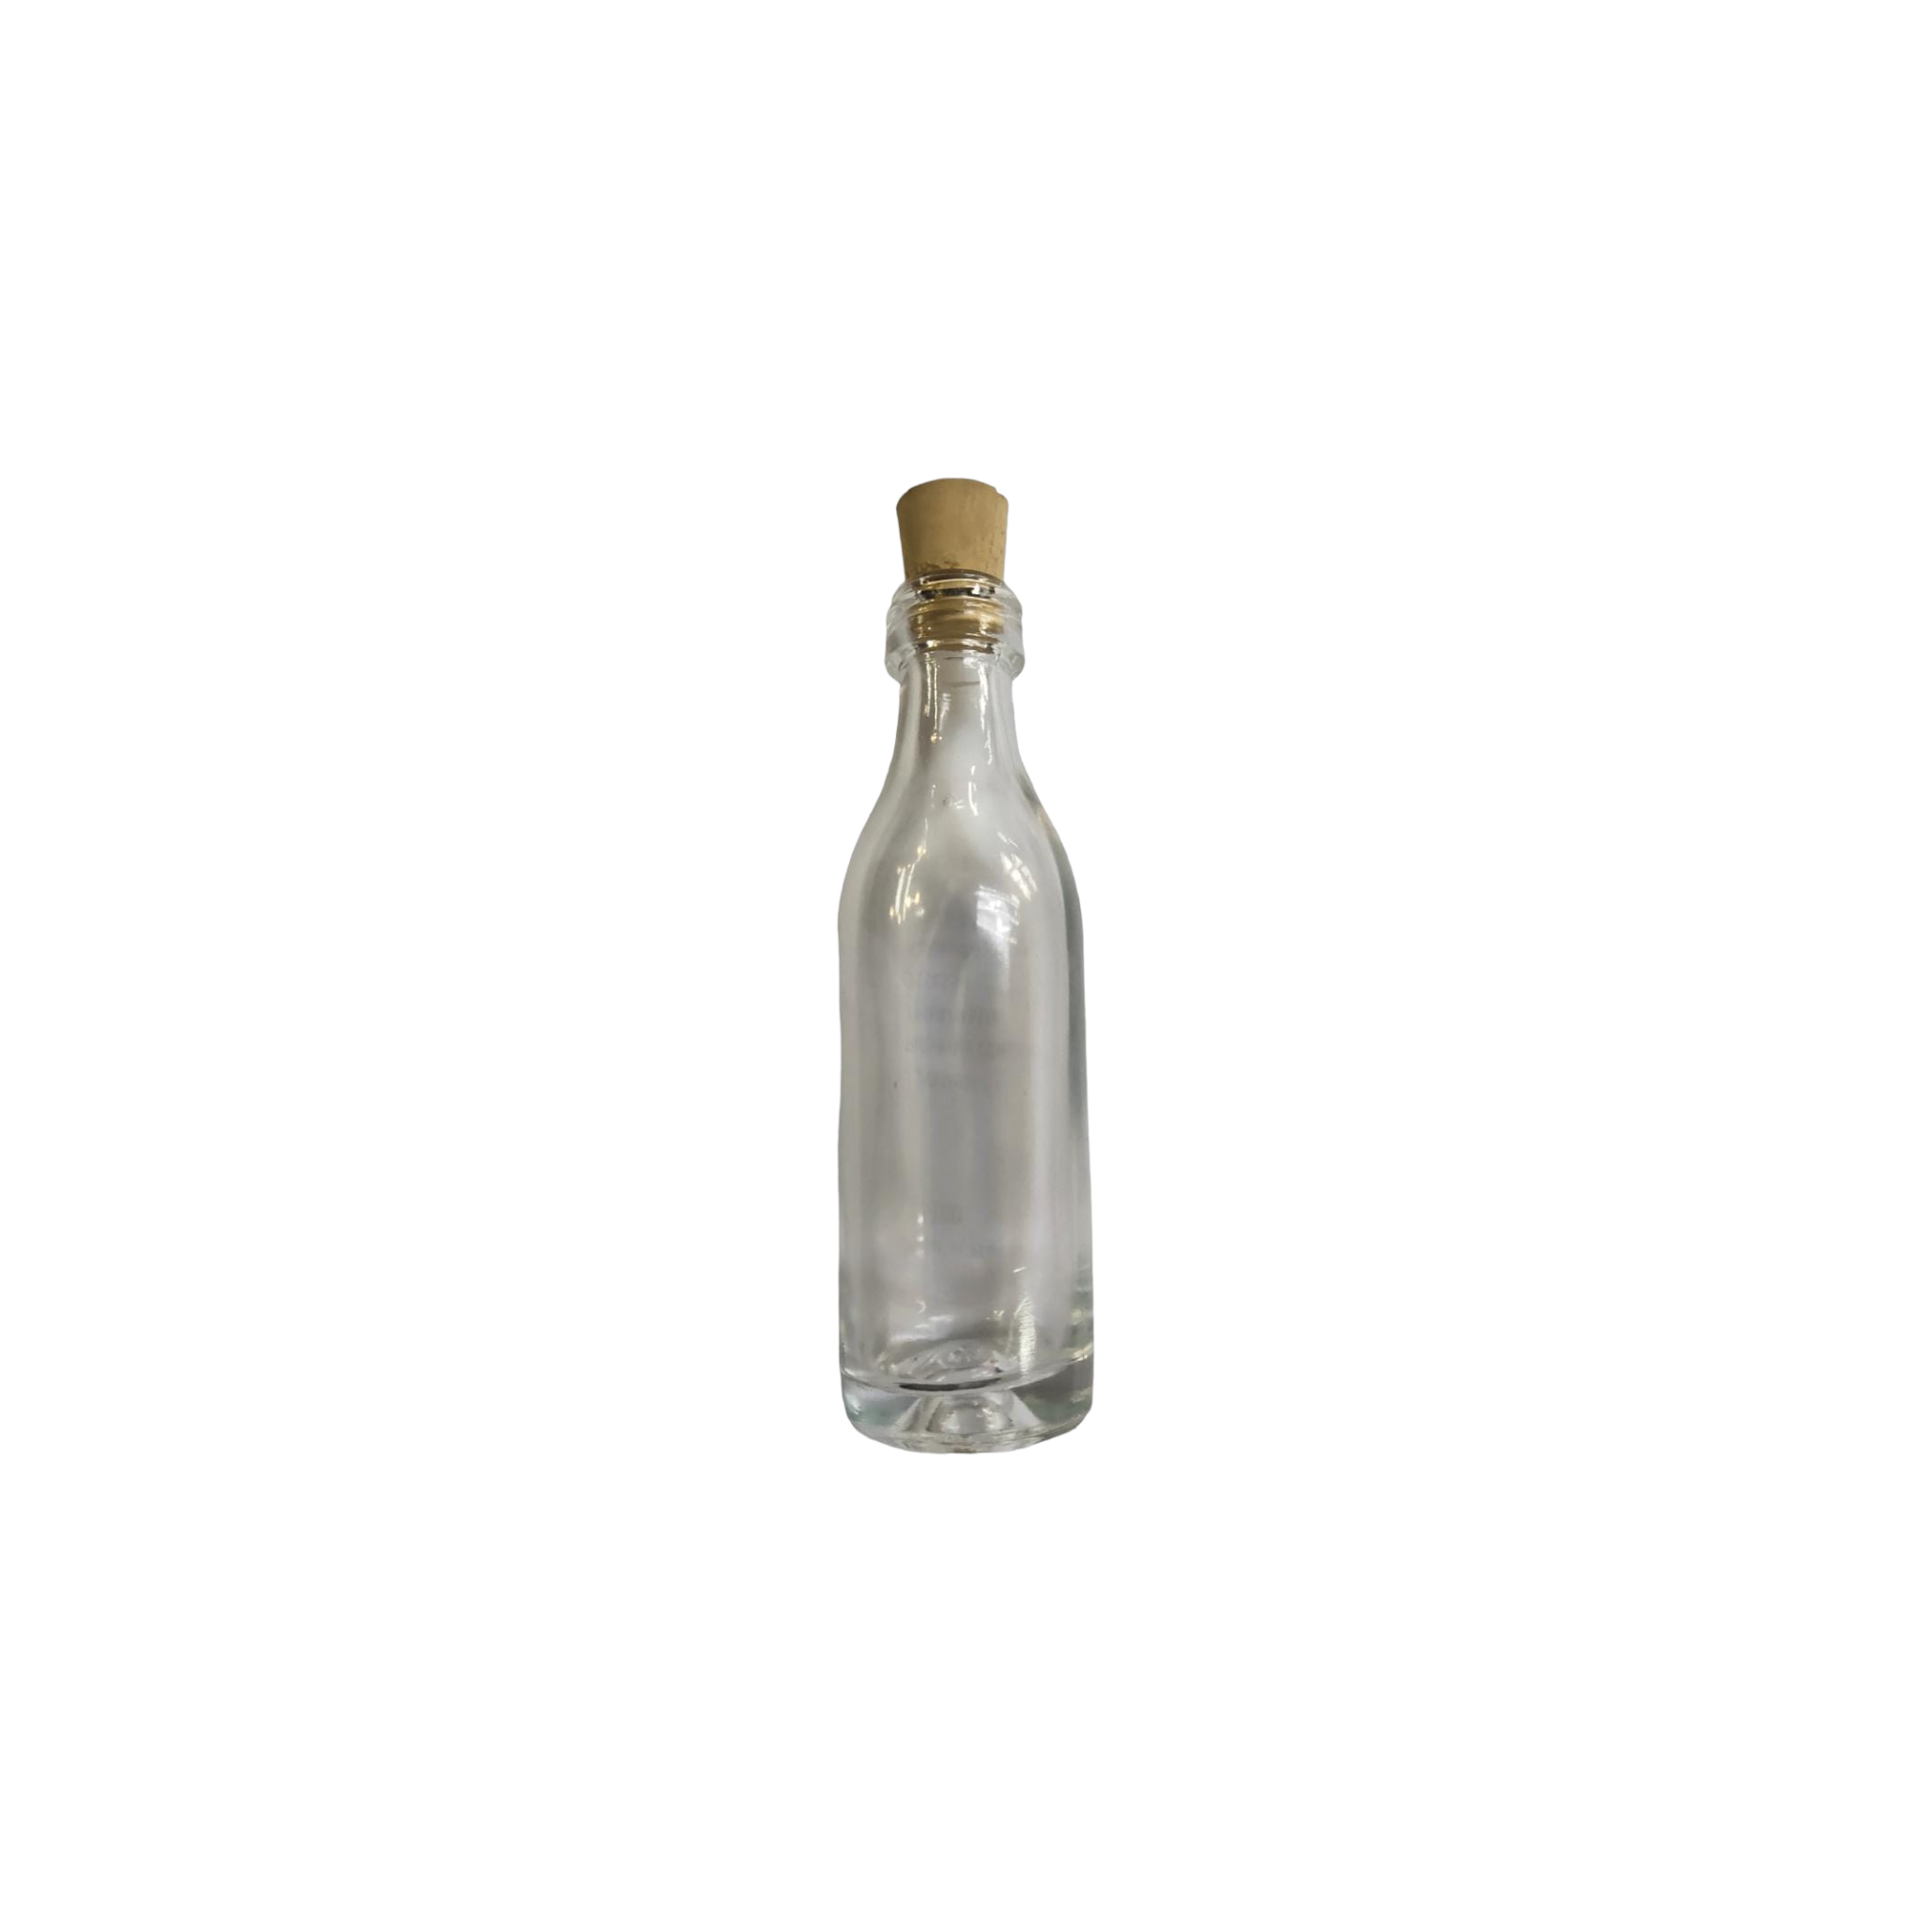 Consol 50ml Glass Mini Spirit Bottle with Cork Lid